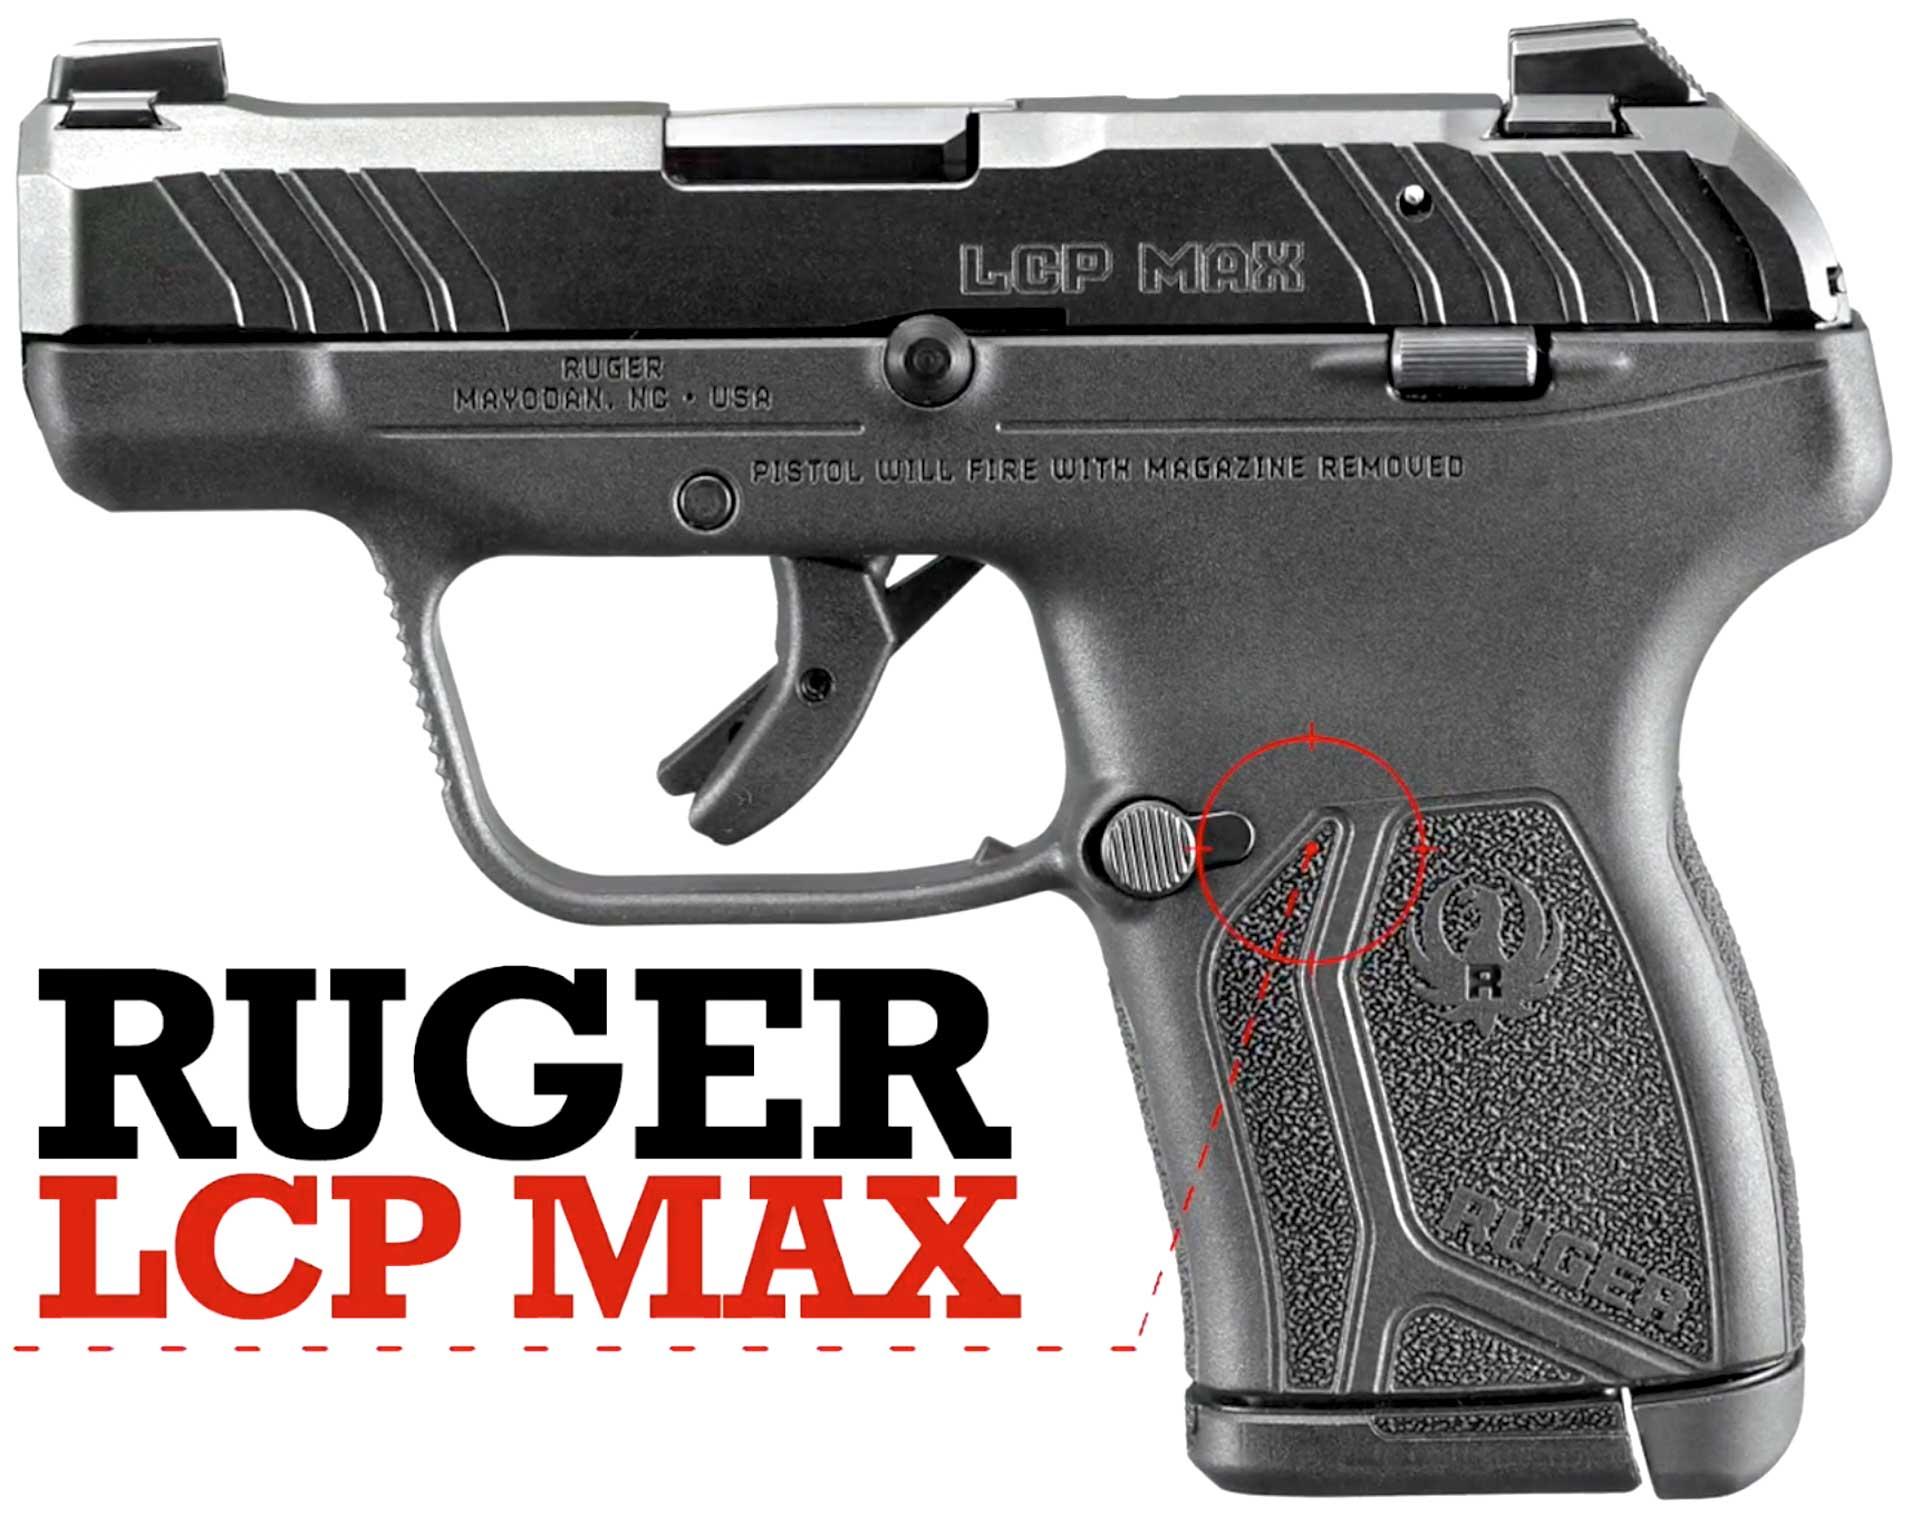 left side black gun pistol handgun plastic steel text on image noting "RUGER LCP MAX"